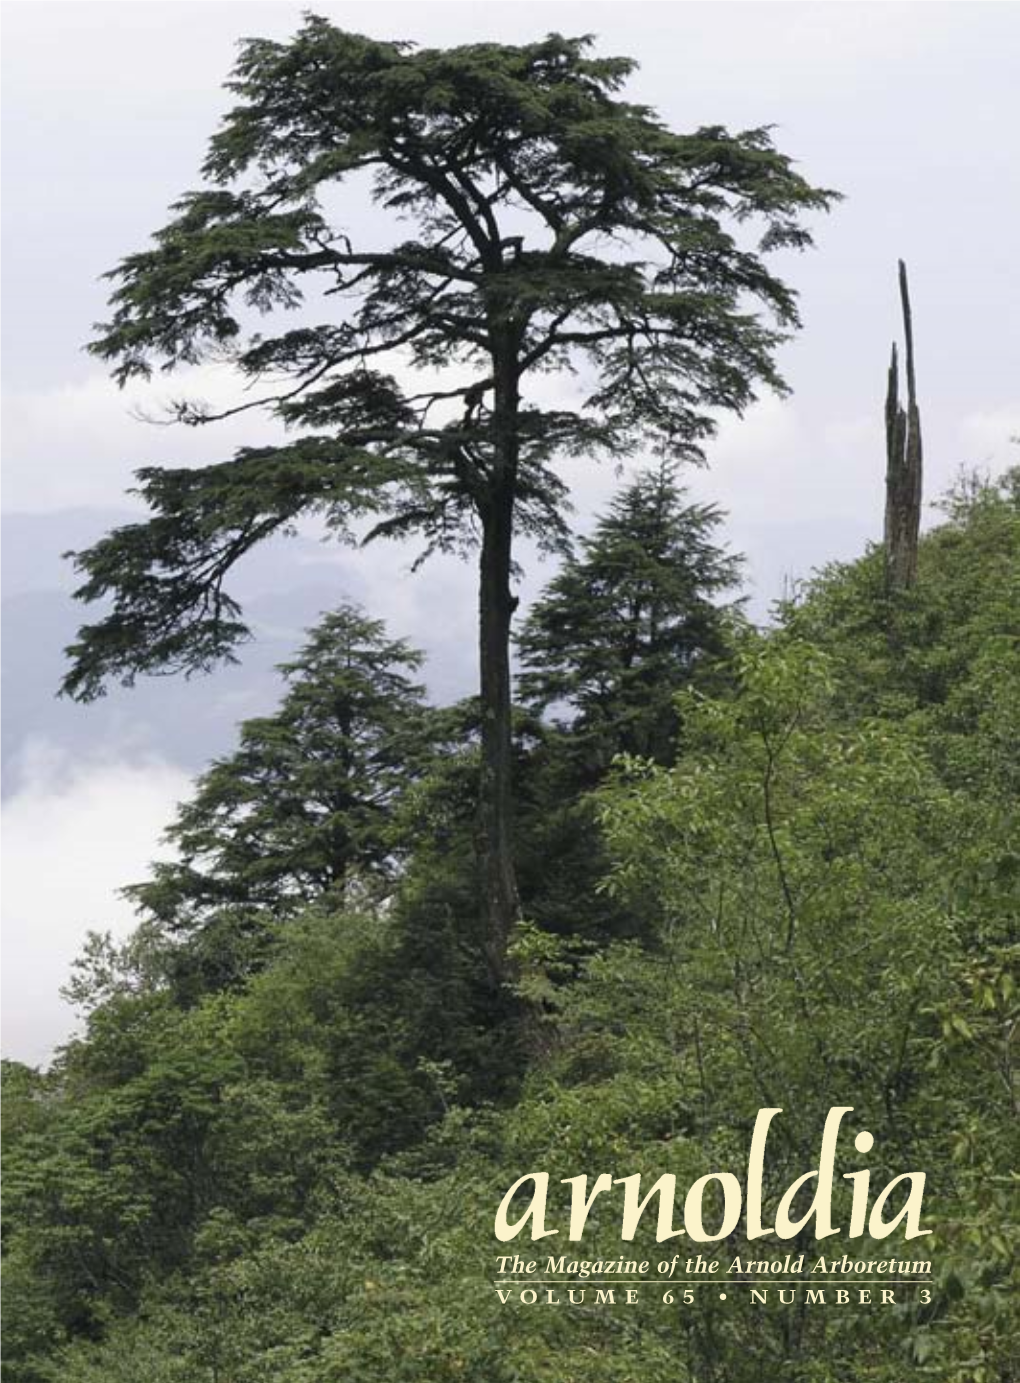 The Magazine of the Arnold Arboretum V O L U M E 6 5 • N U M B E R 3